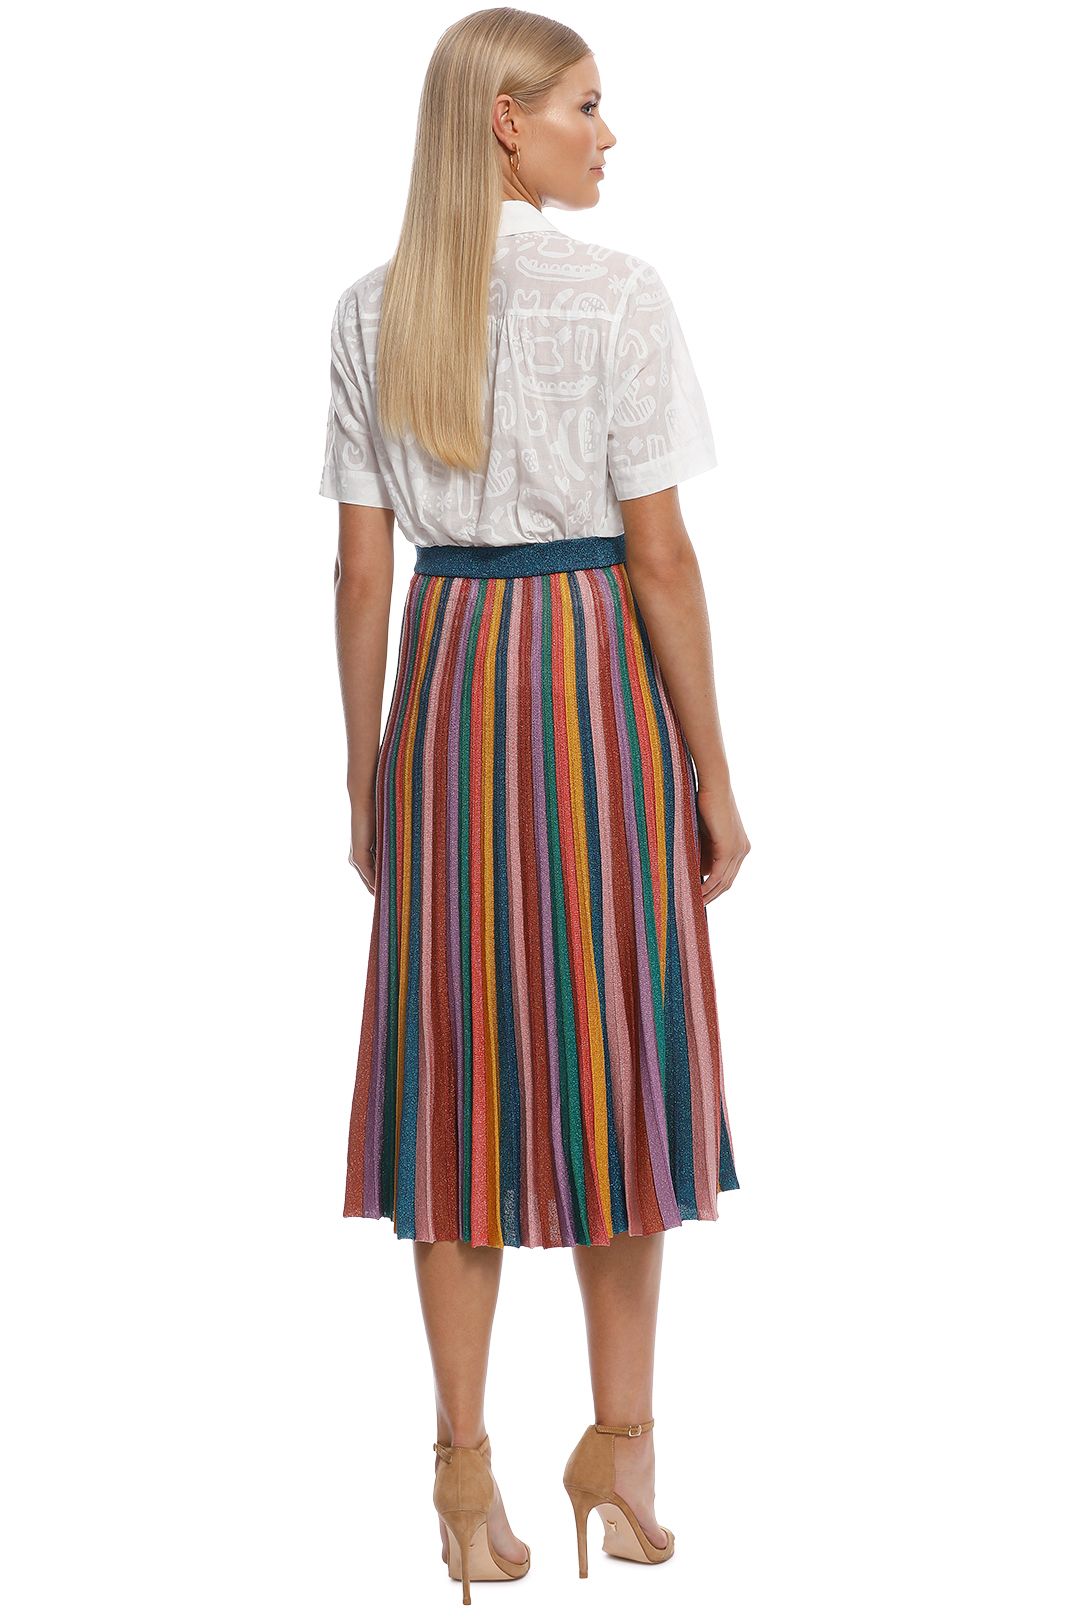 Gorman - Rainbow Knit Skirt - Multi - Back